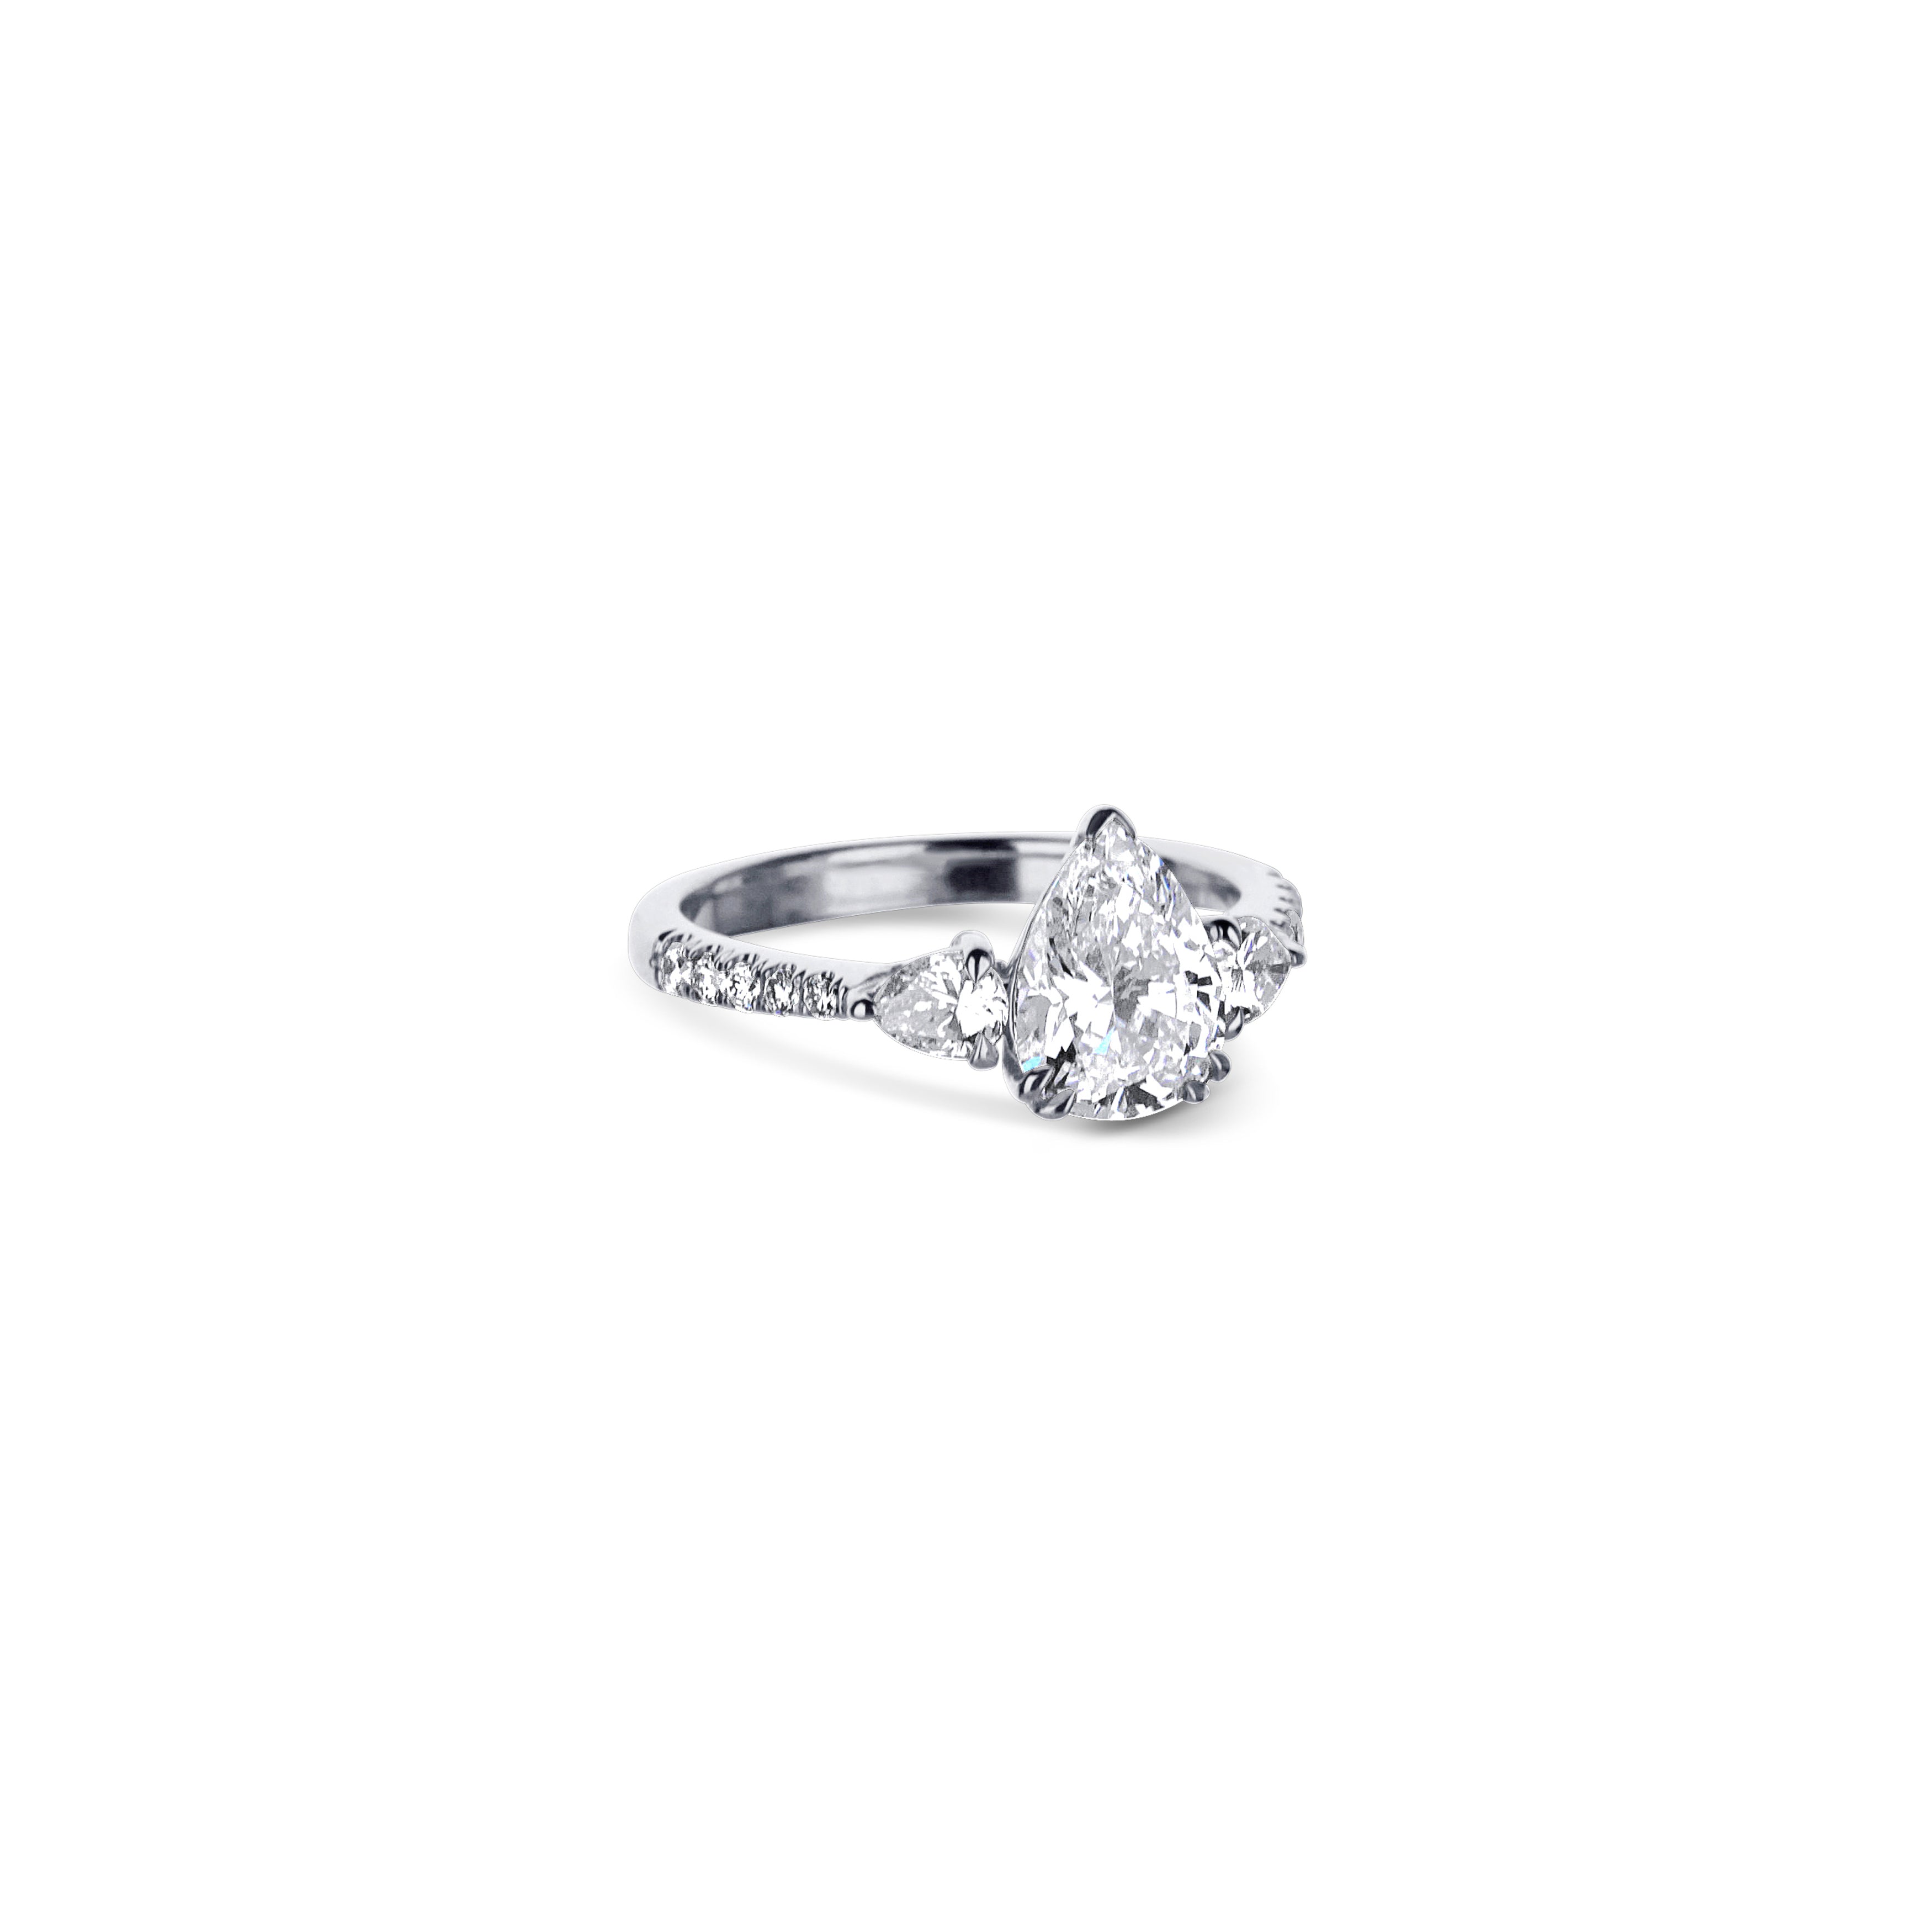 18K White Gold Pear Shaped Diamond Engagement Ring